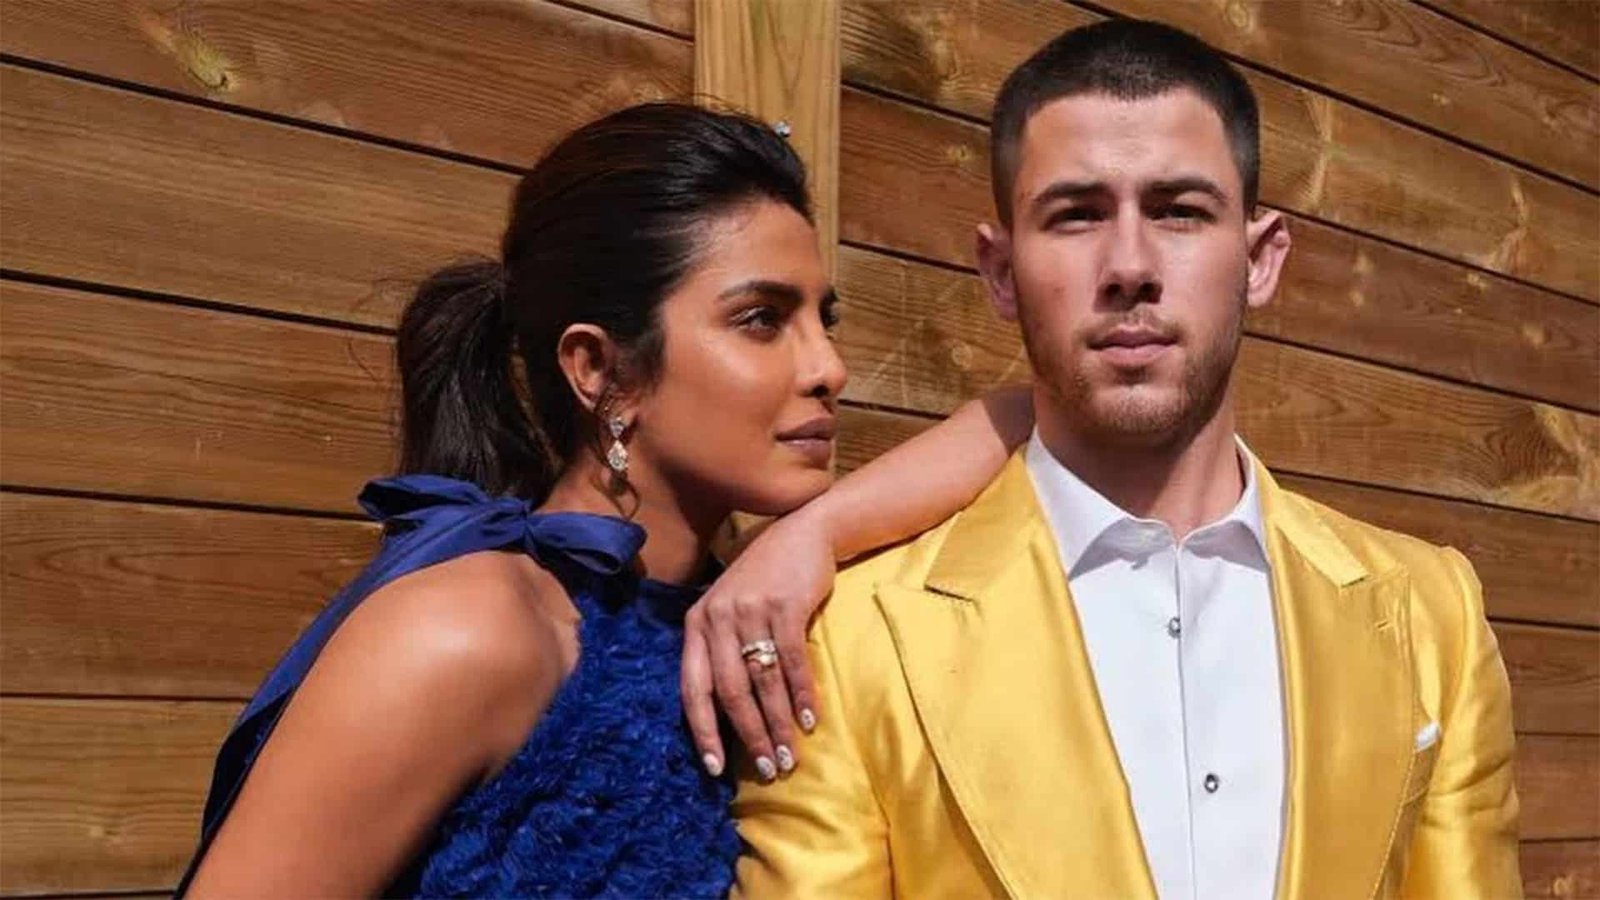 Nick Jonas were ‘qualified enough’ to announce Oscar nomination, Priyanka Chopra slams Aussie journalist who asked